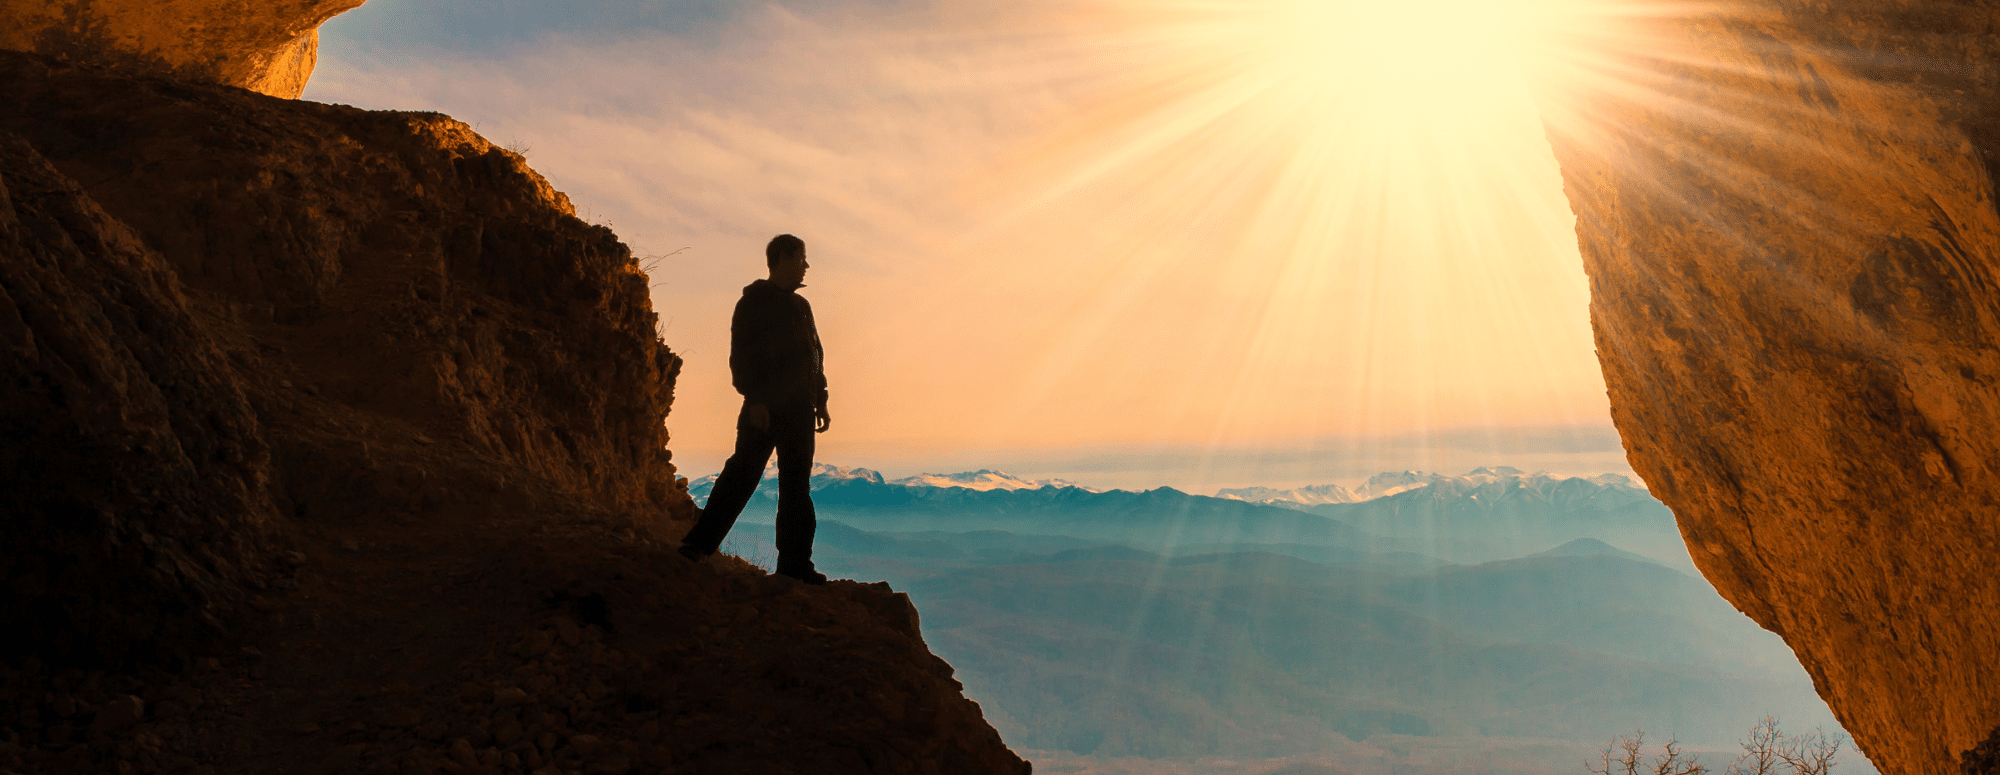 man on cliff looking at sun rays